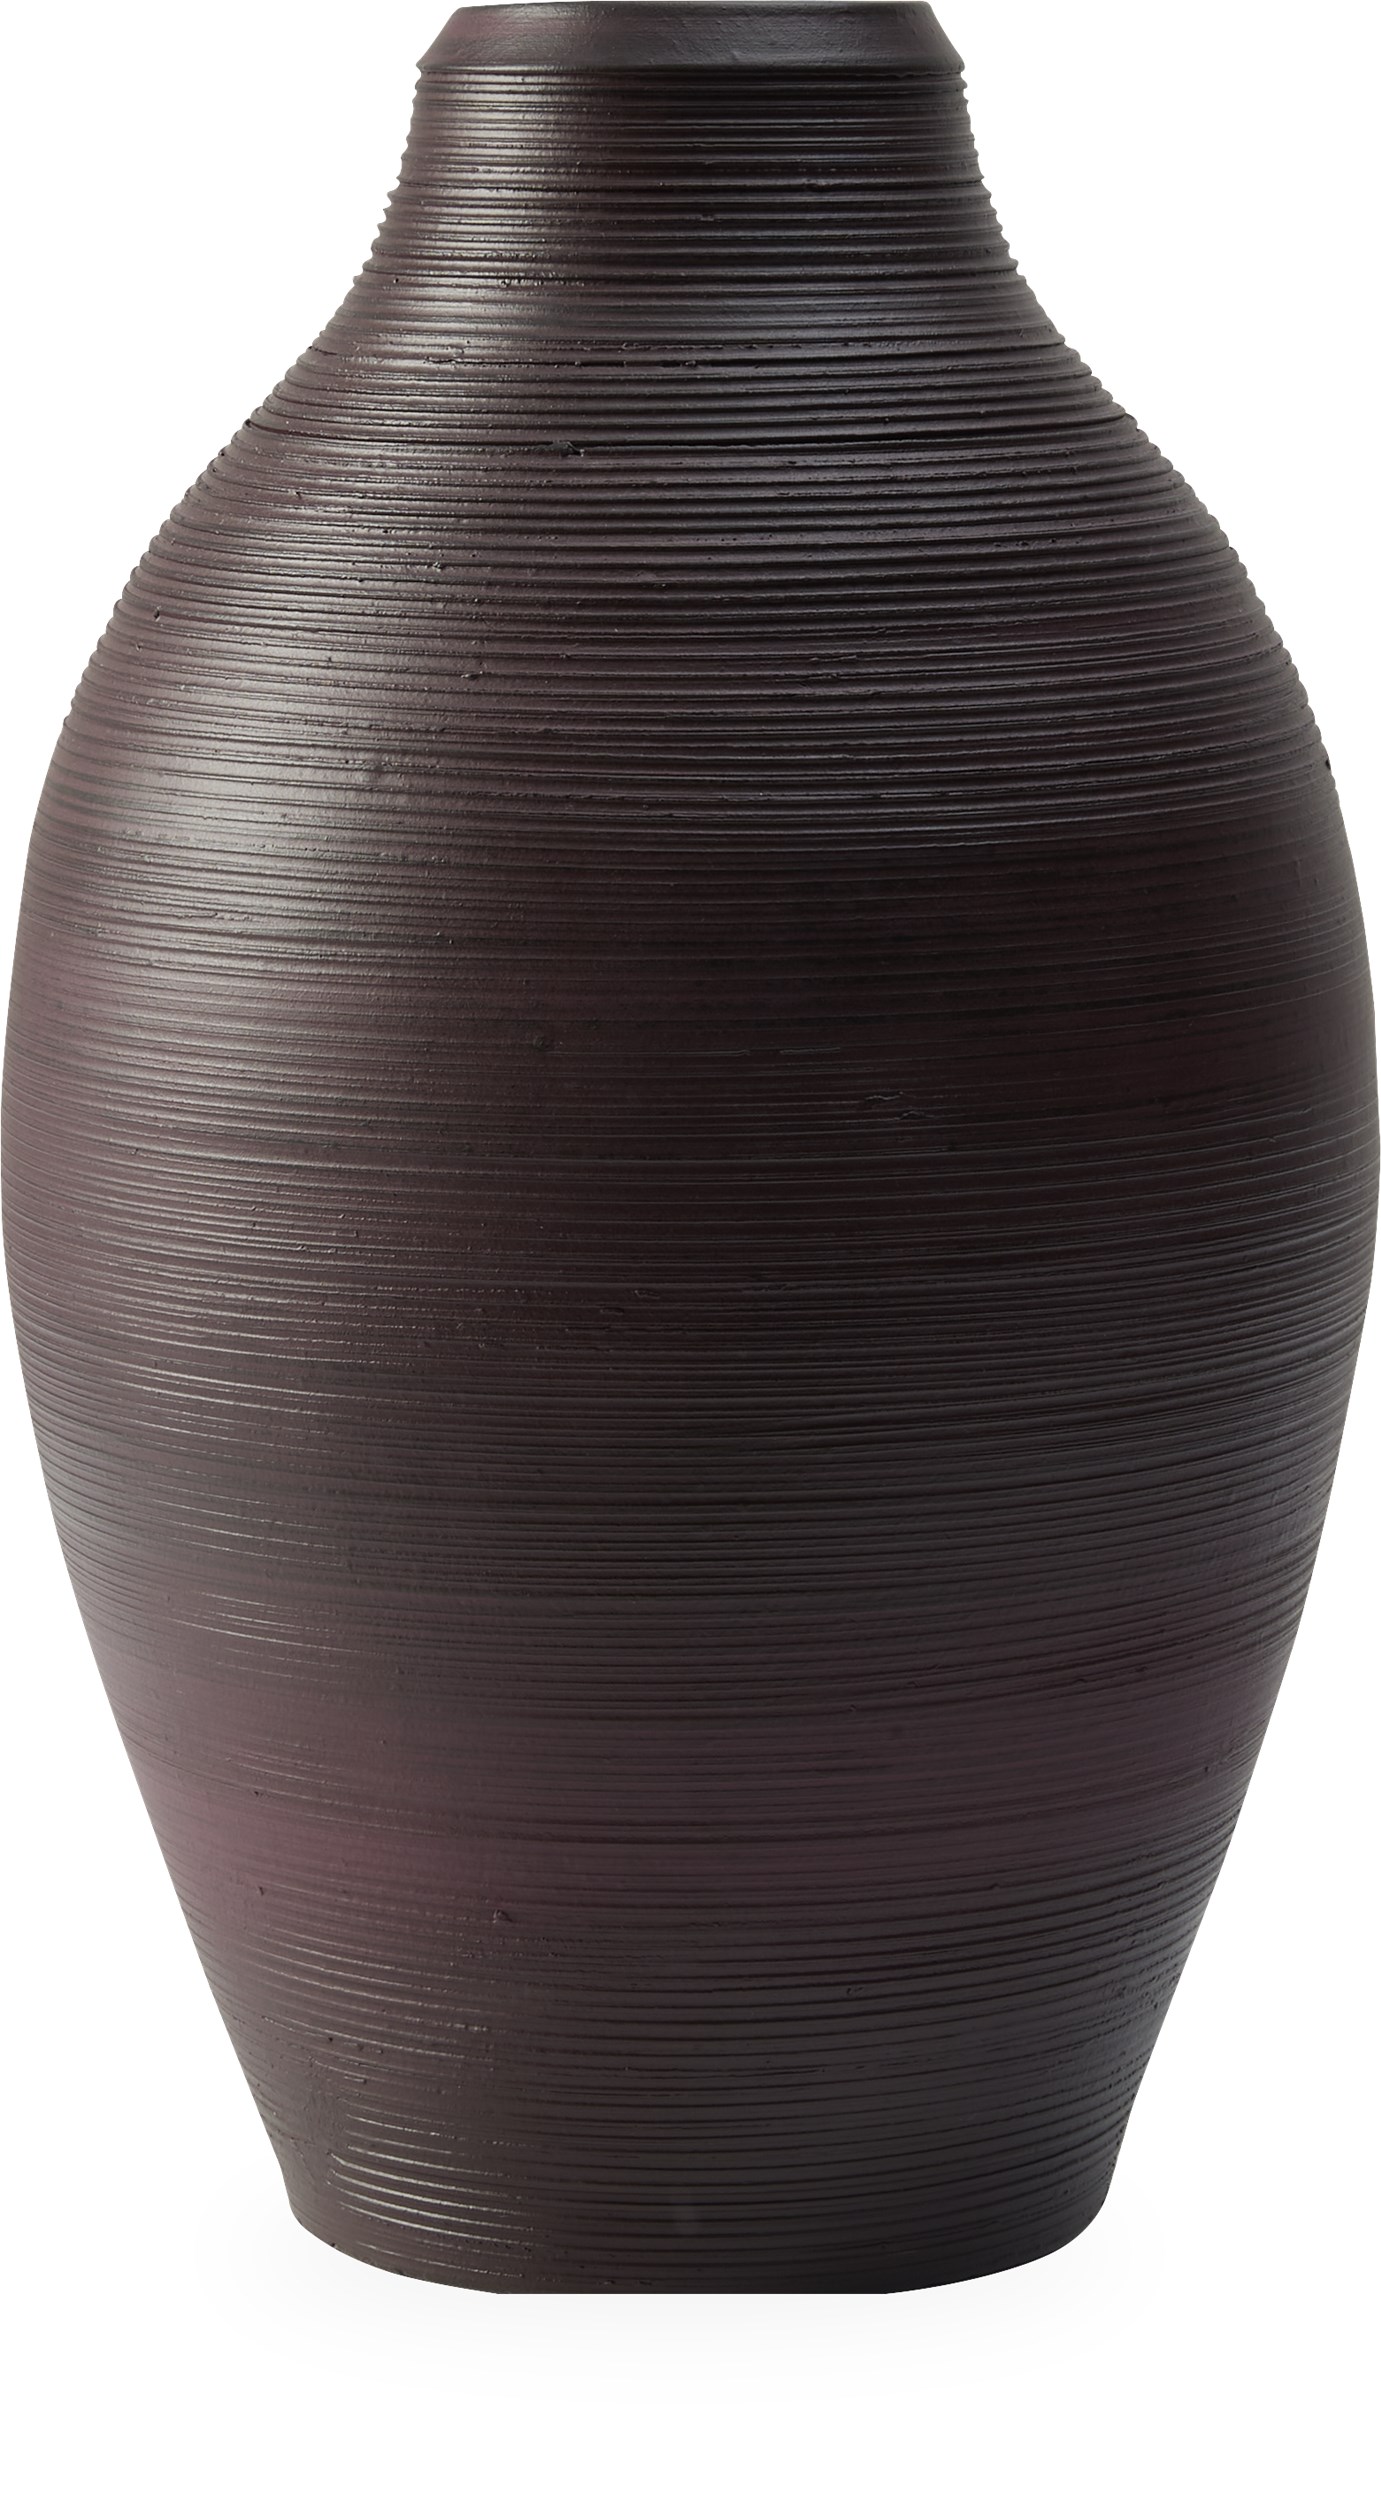 Gordo Vase 50 x 31 cm - Vinrød terracotta